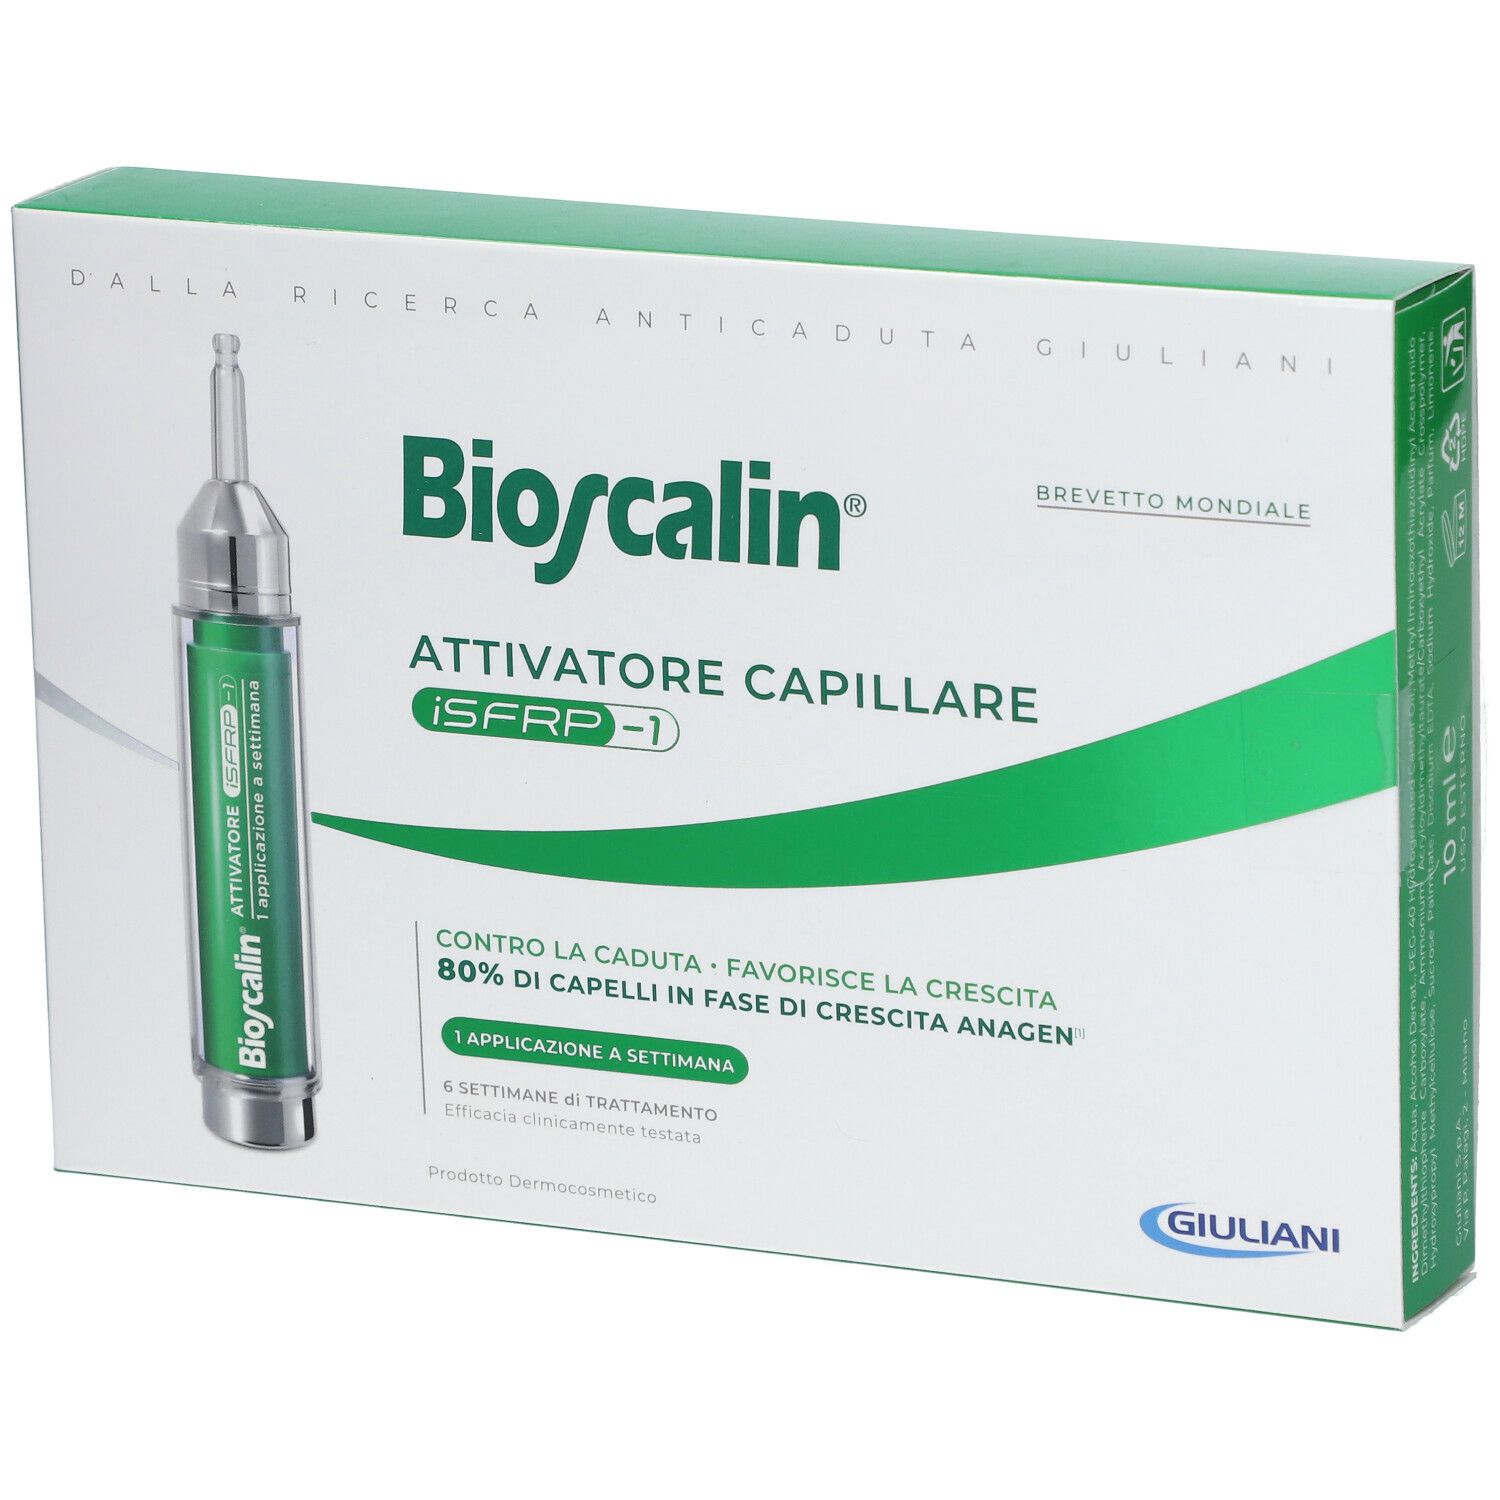 Bioscalin® Kapillaraktivator iSFRP-1